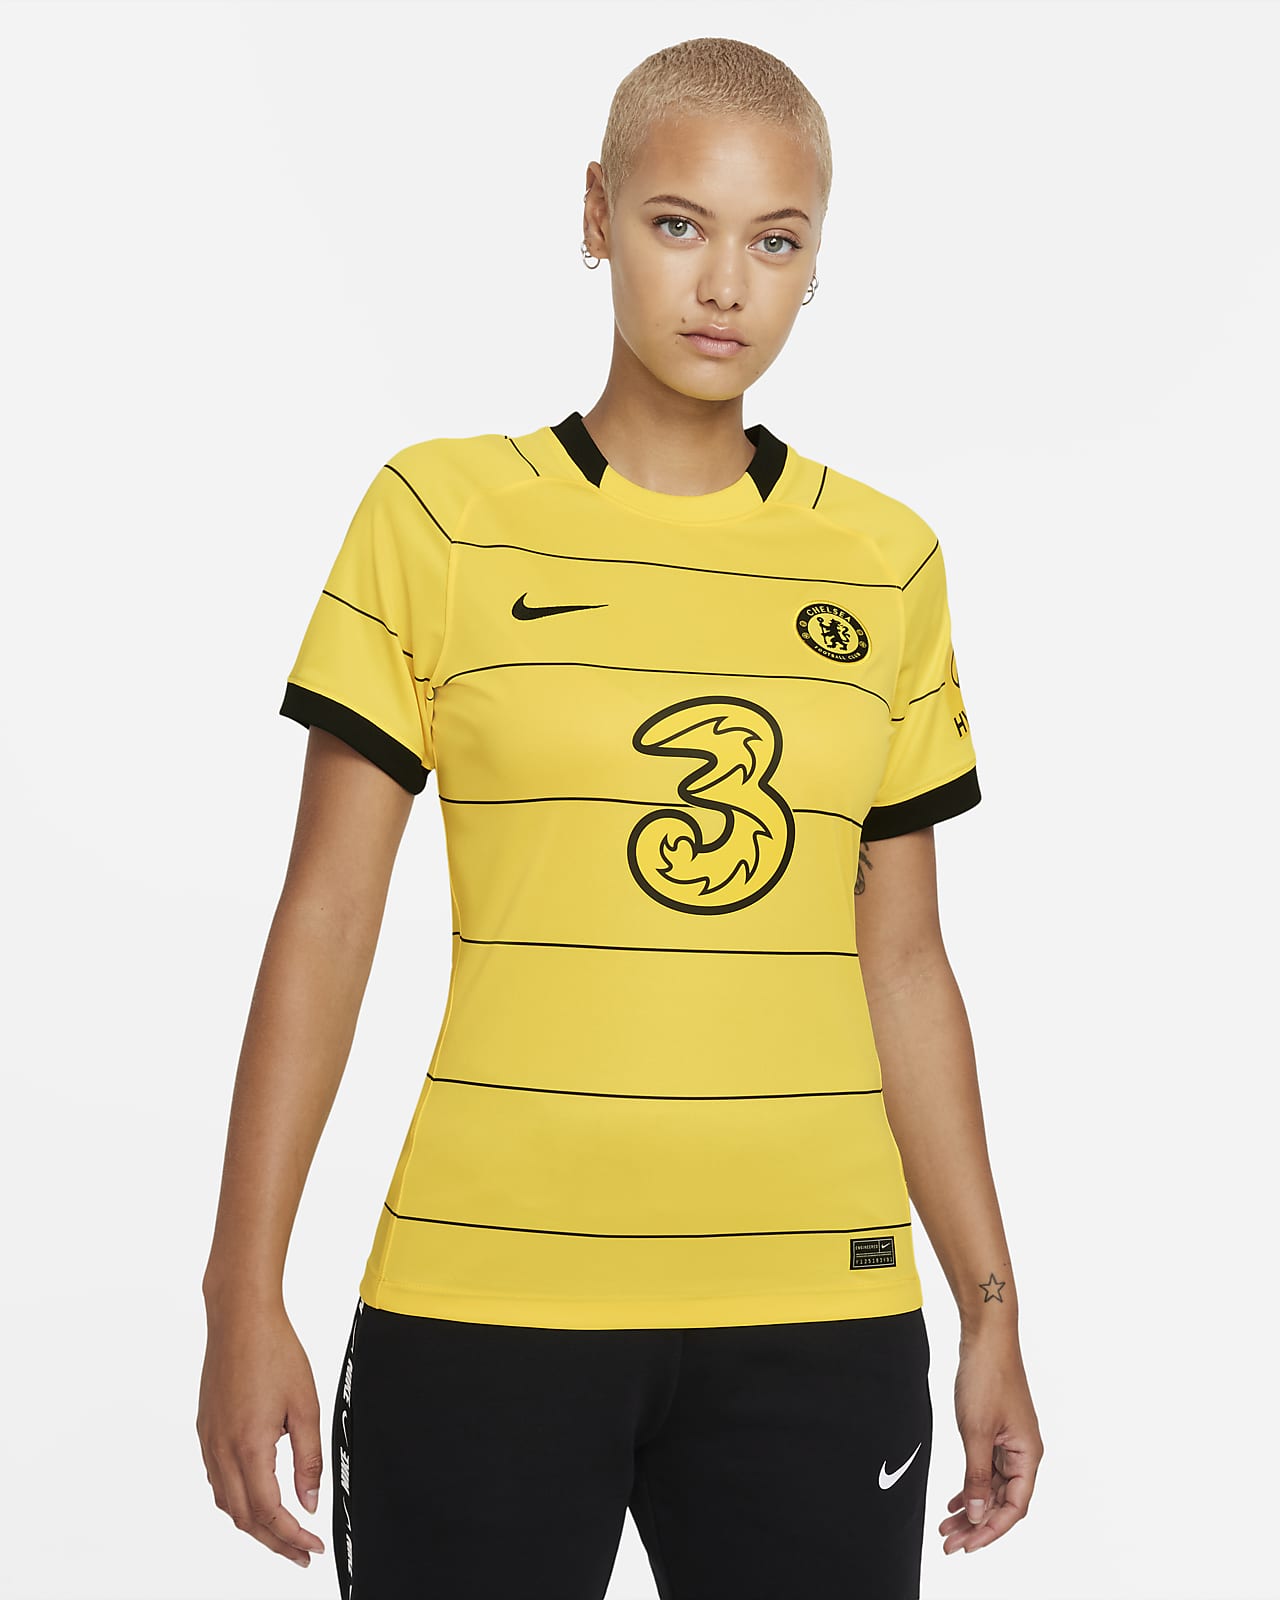 Chelsea F.C. 2021/22 Stadium Away Women's Nike Dri-FIT Football Shirt